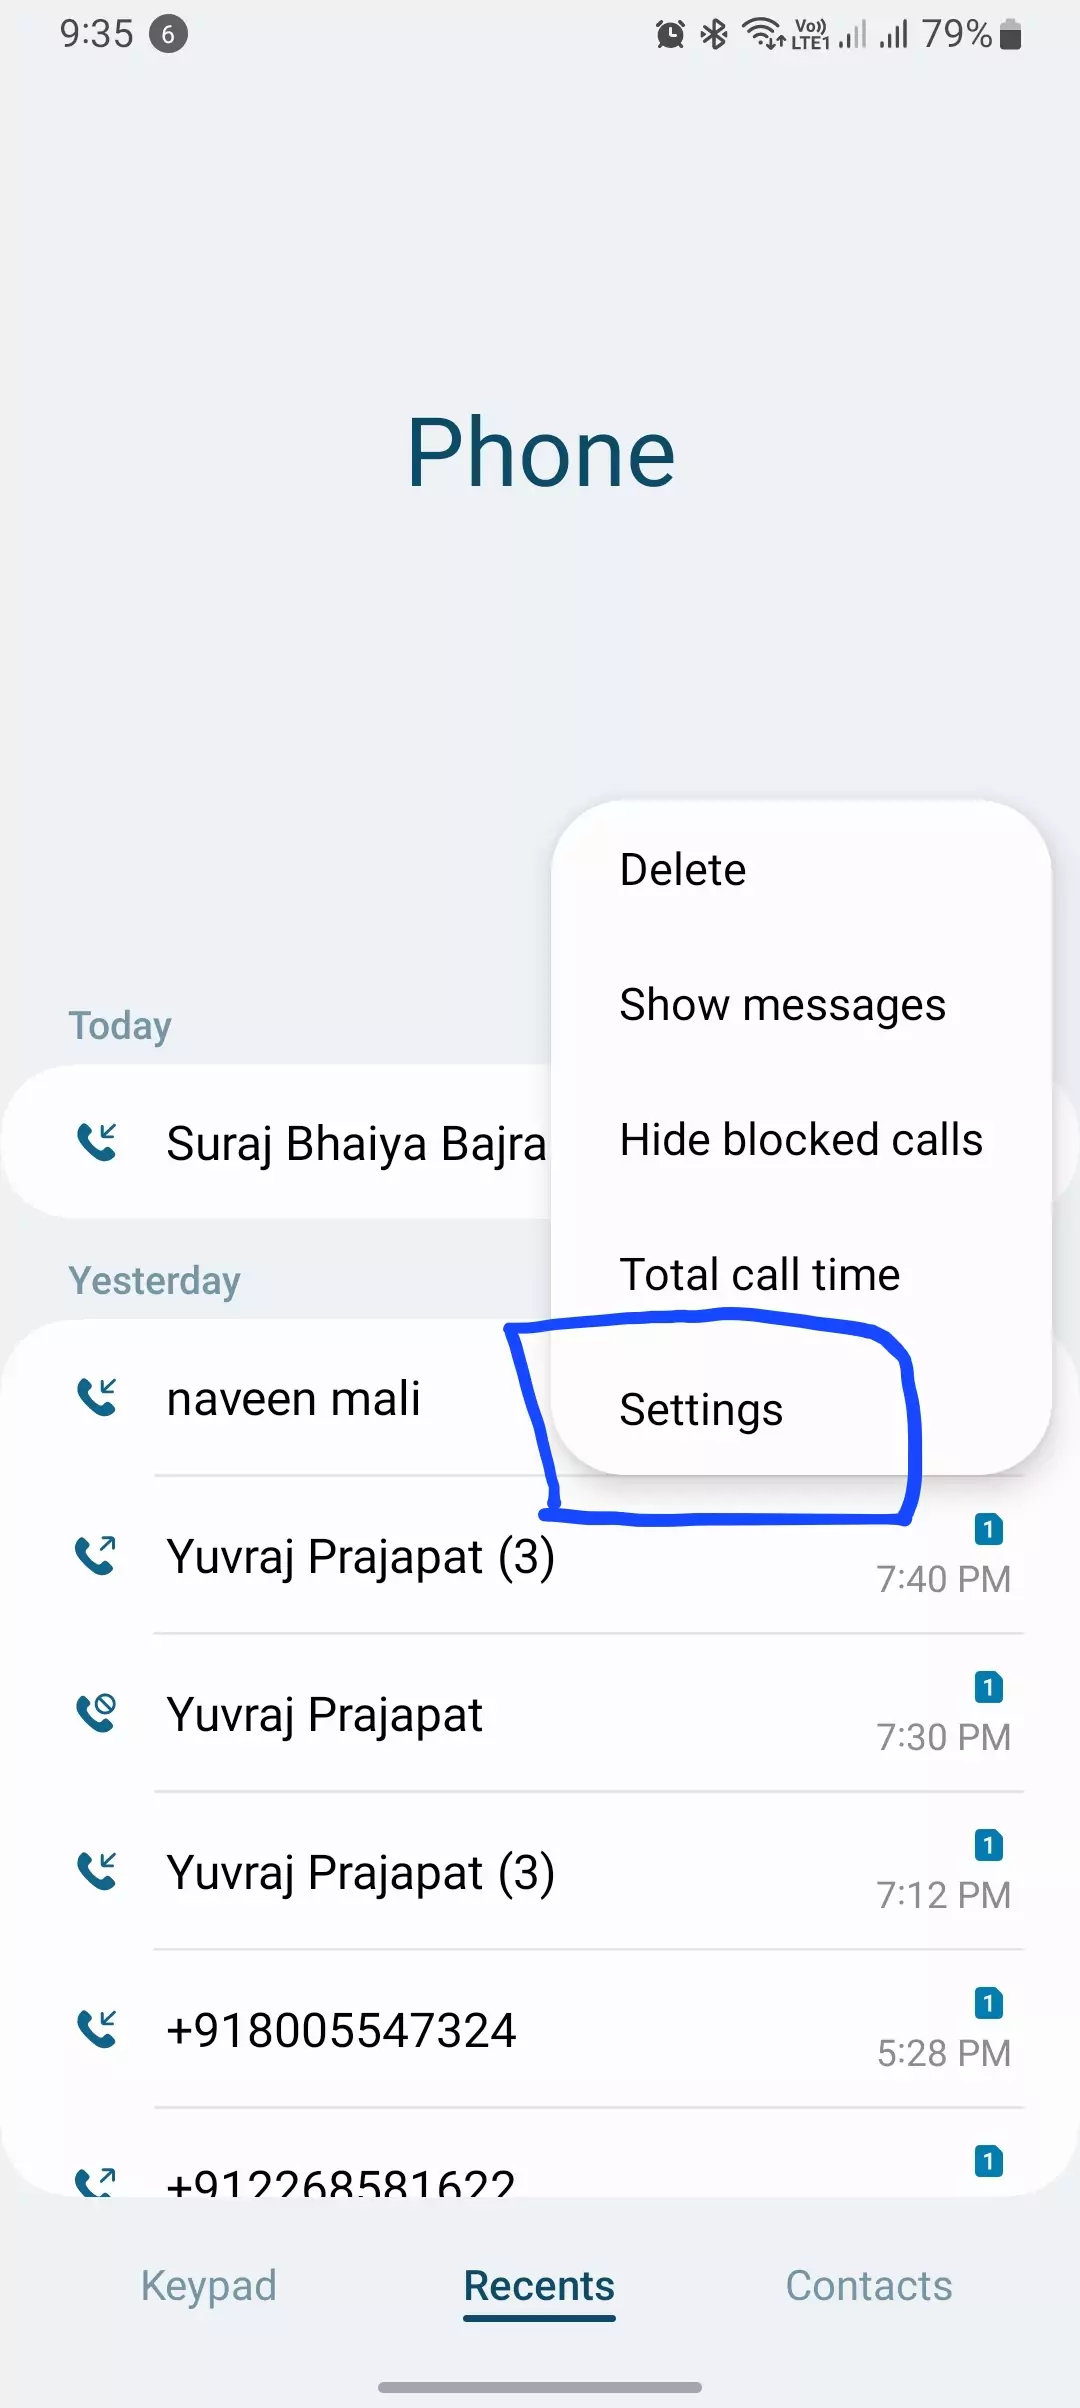 phone app settings highlighted